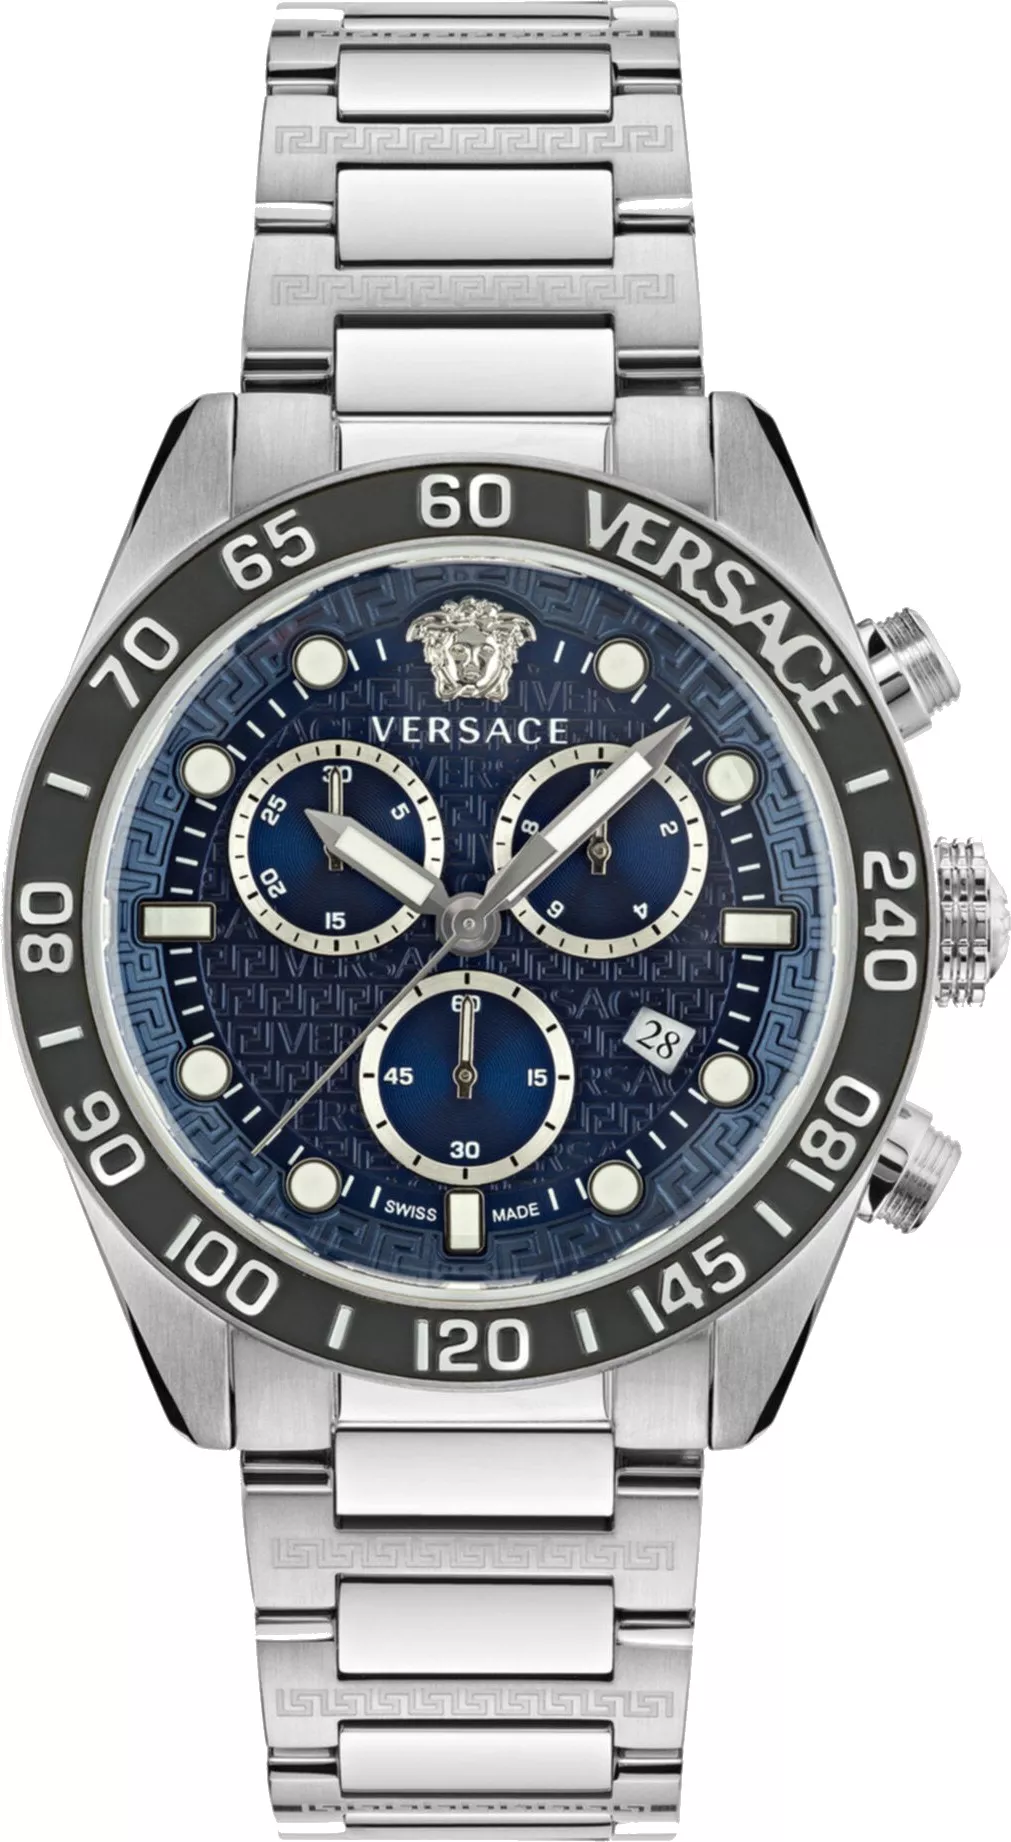 MSP: 102845 Versace Greca Dome Chrono Watch 43mm 34,520,000